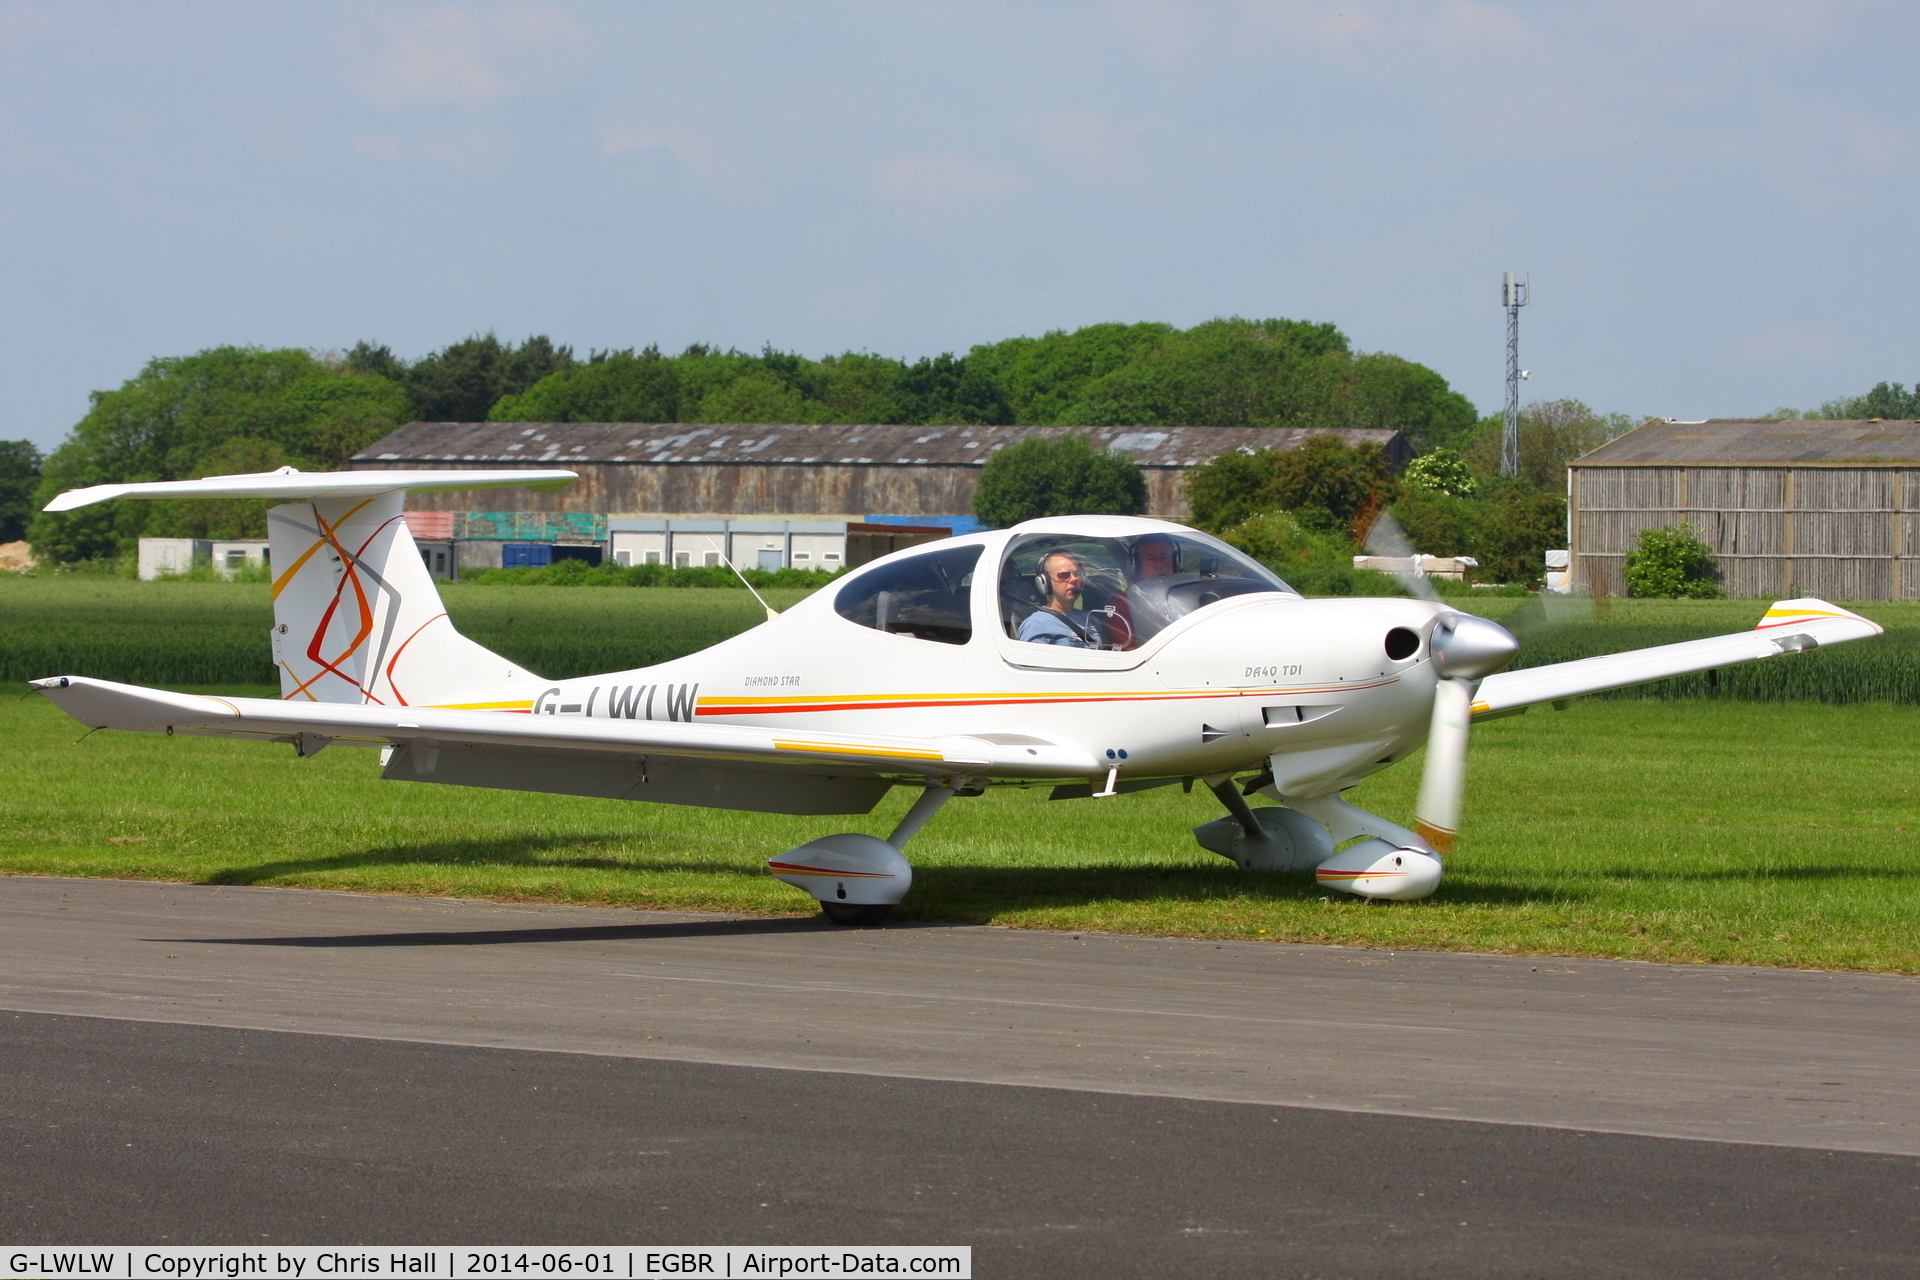 G-LWLW, 2003 Diamond DA-40D Diamond Star C/N D4.052, at Breighton's Open Cockpit & Biplane Fly-in, 2014